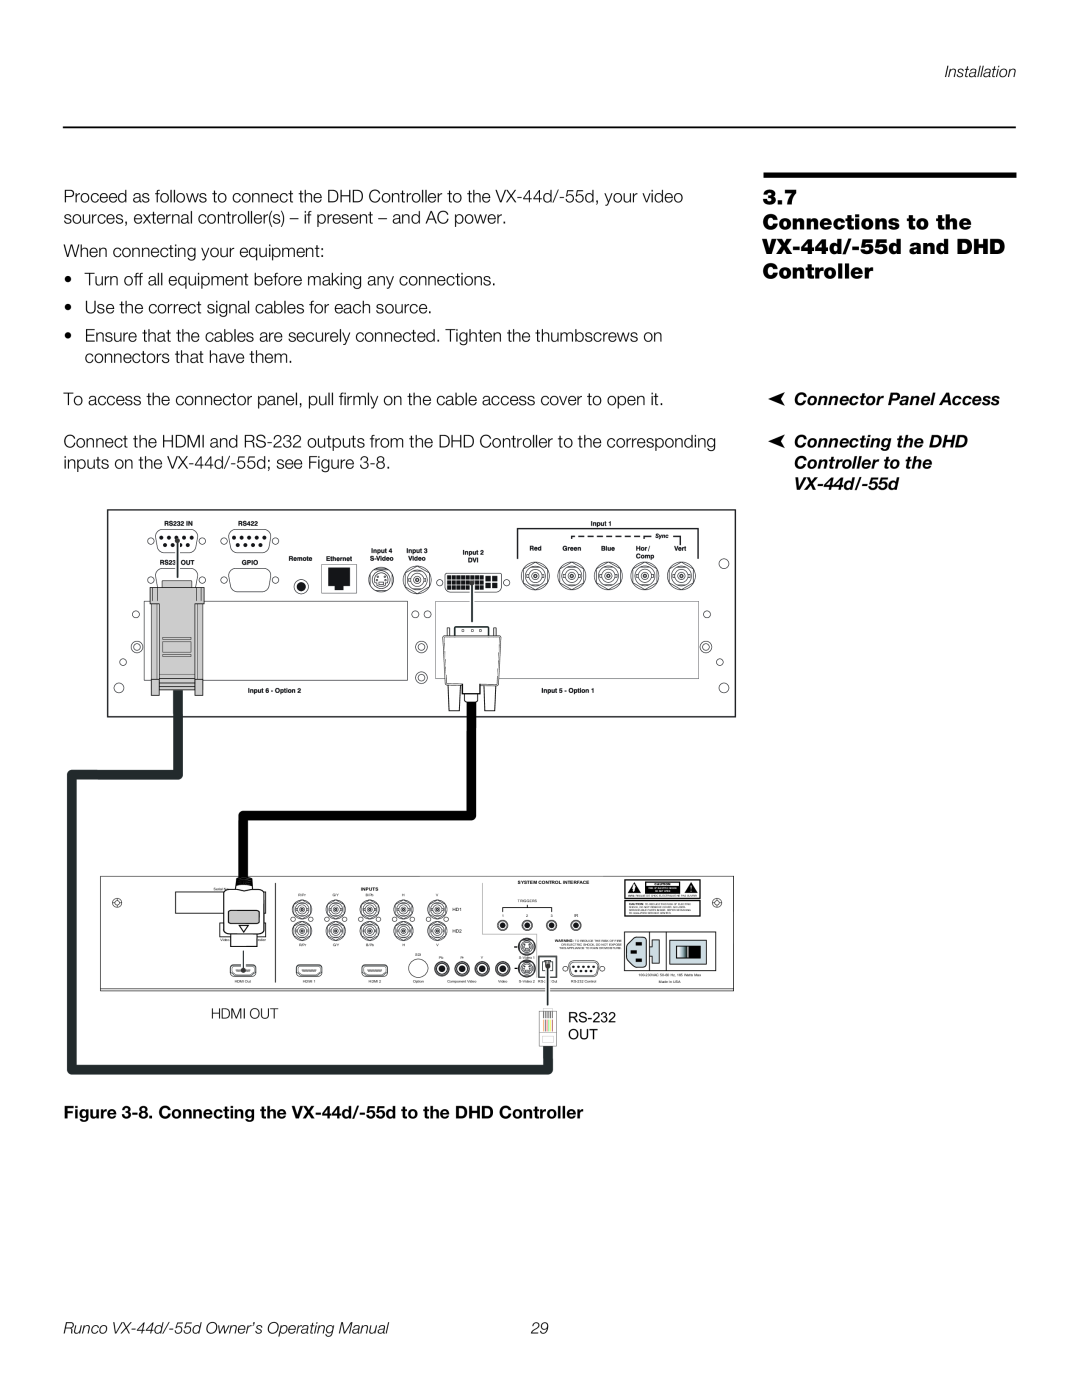 Runco VX-55D manual Connections to the VX-44d/-55d and DHD Controller, 8. Connecting the VX-44d/-55d to the DHD Controller 